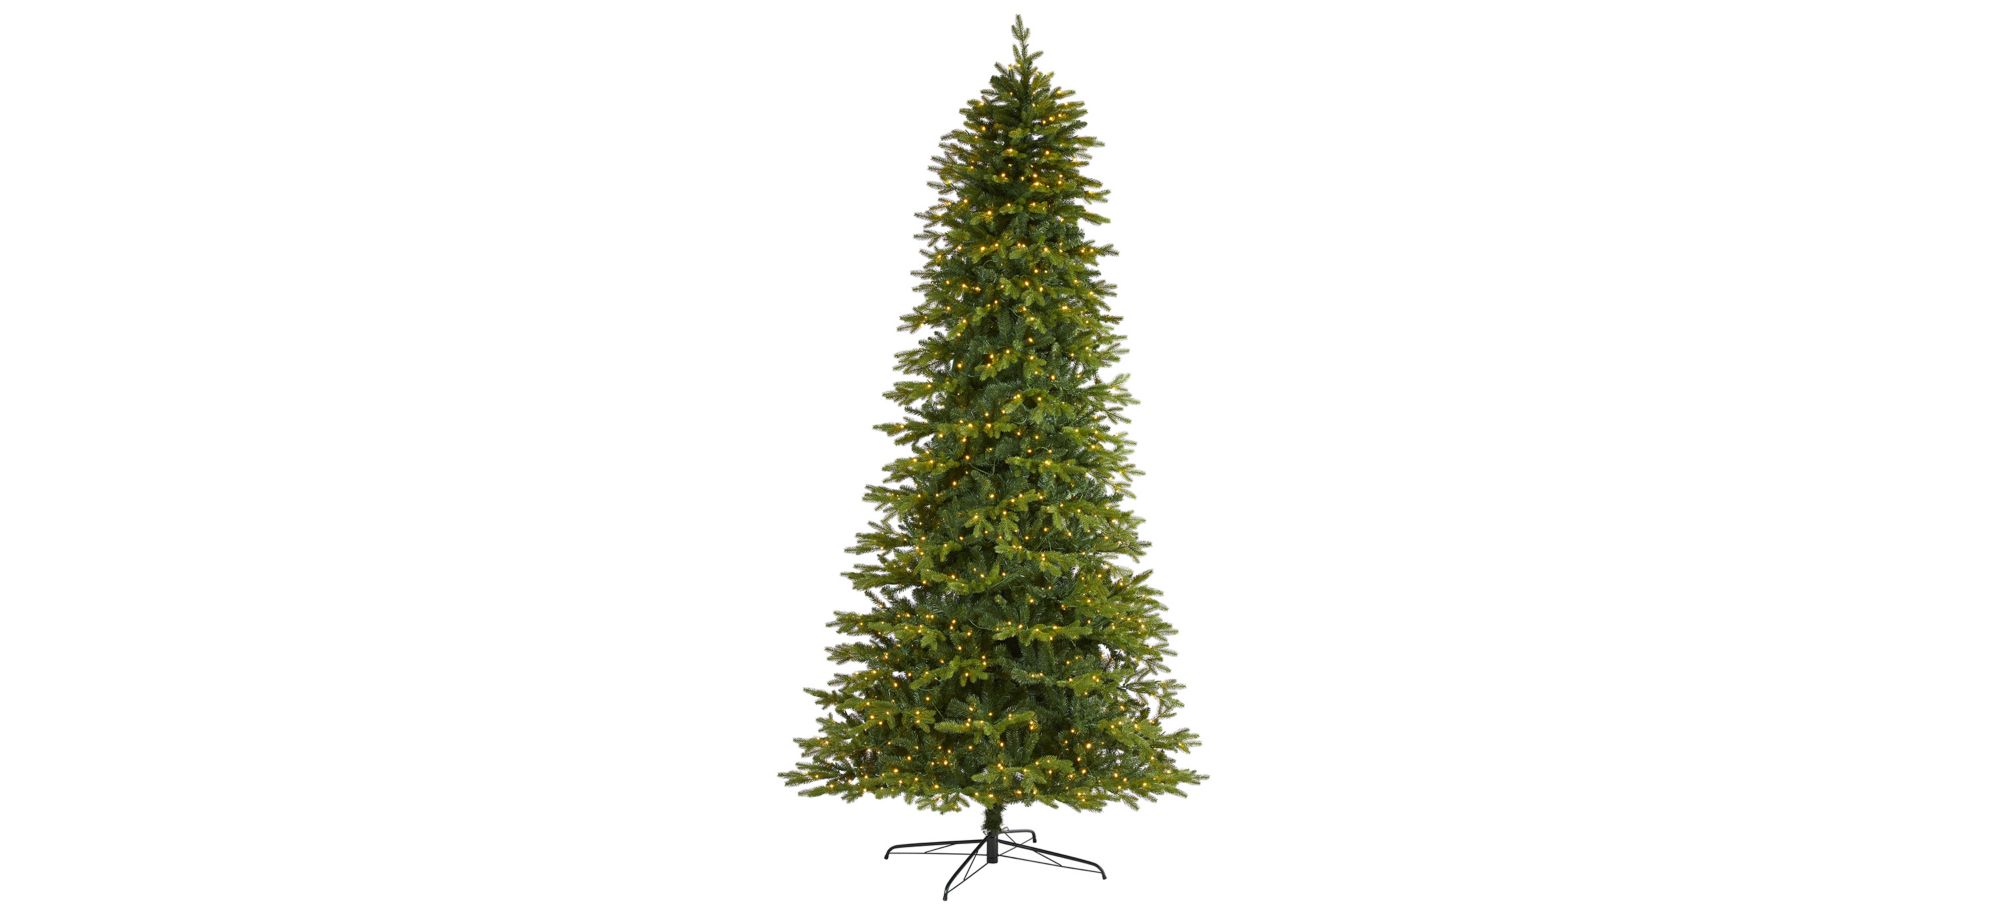 10ft. Pre-Lit Belgium Fir "Natural Look" Artificial Christmas Tree in Green by Bellanest